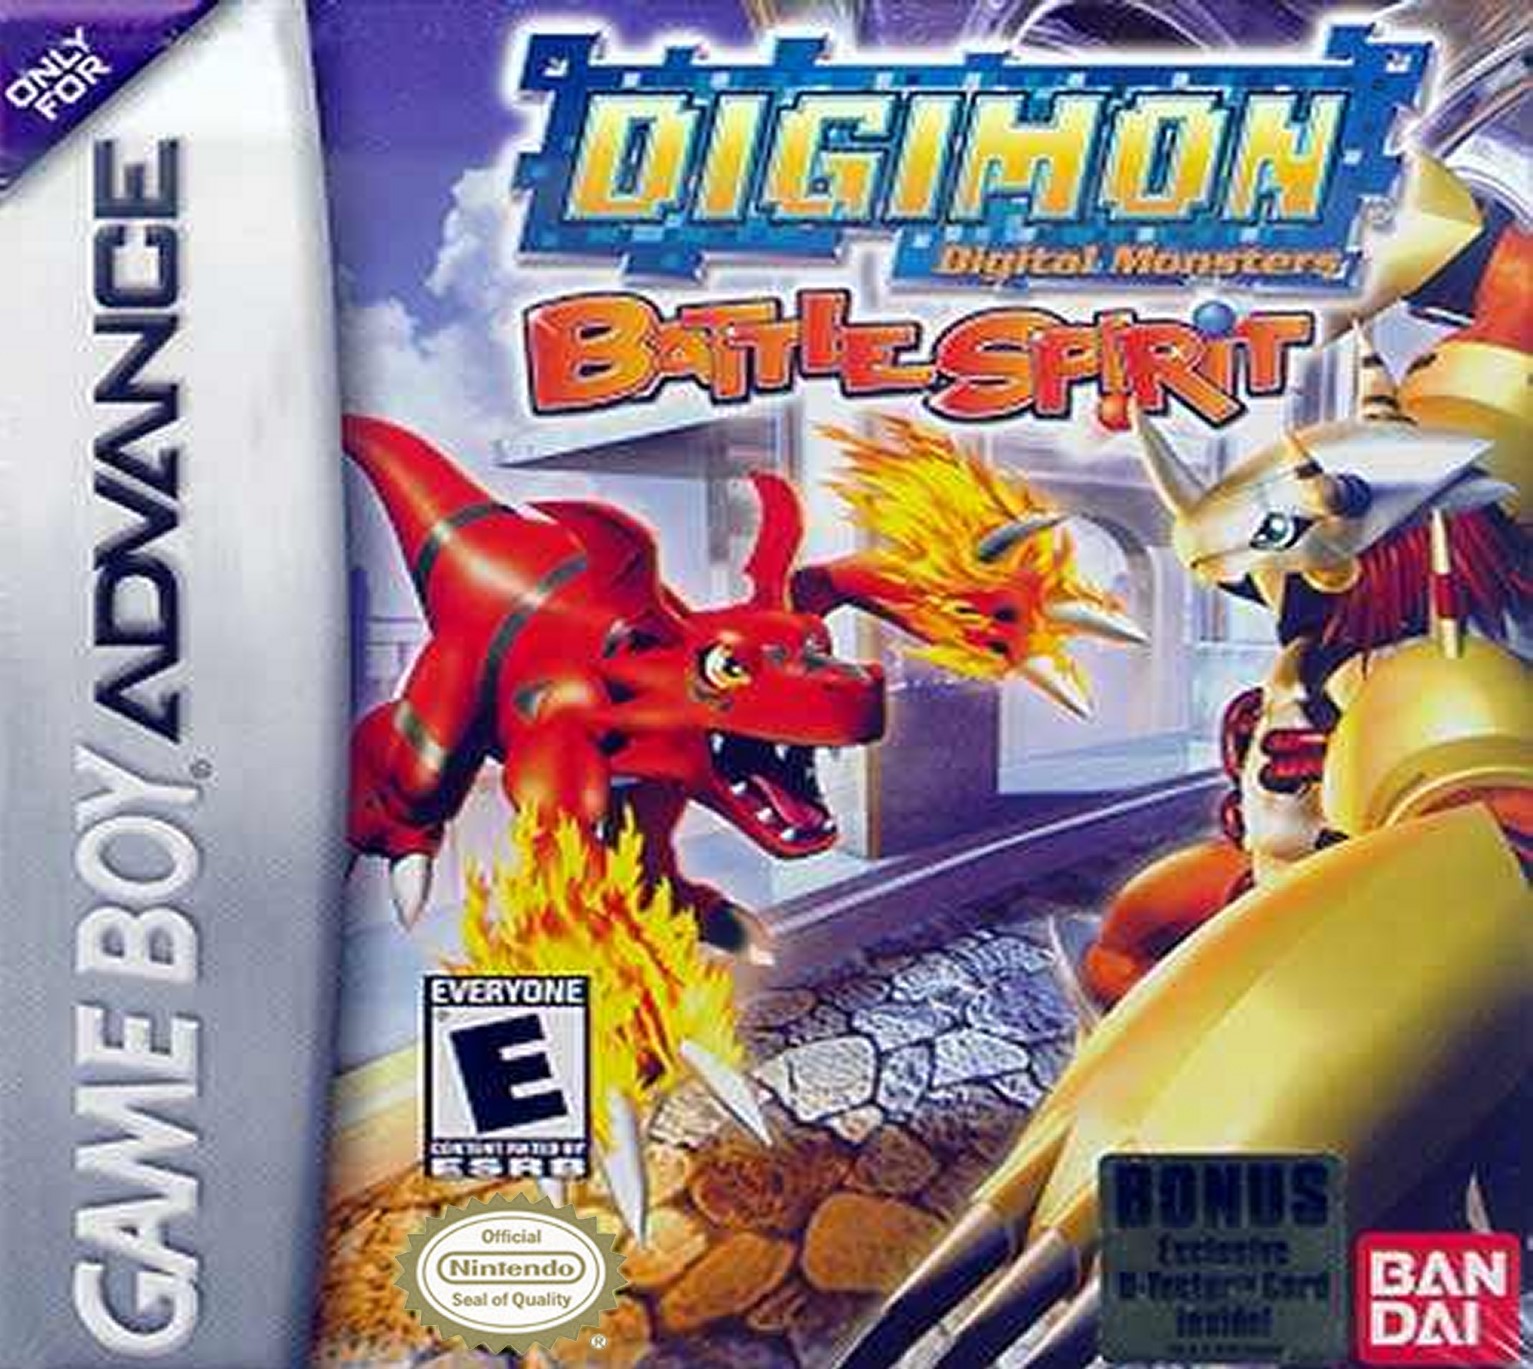 'Digimon: Battle Spirit'